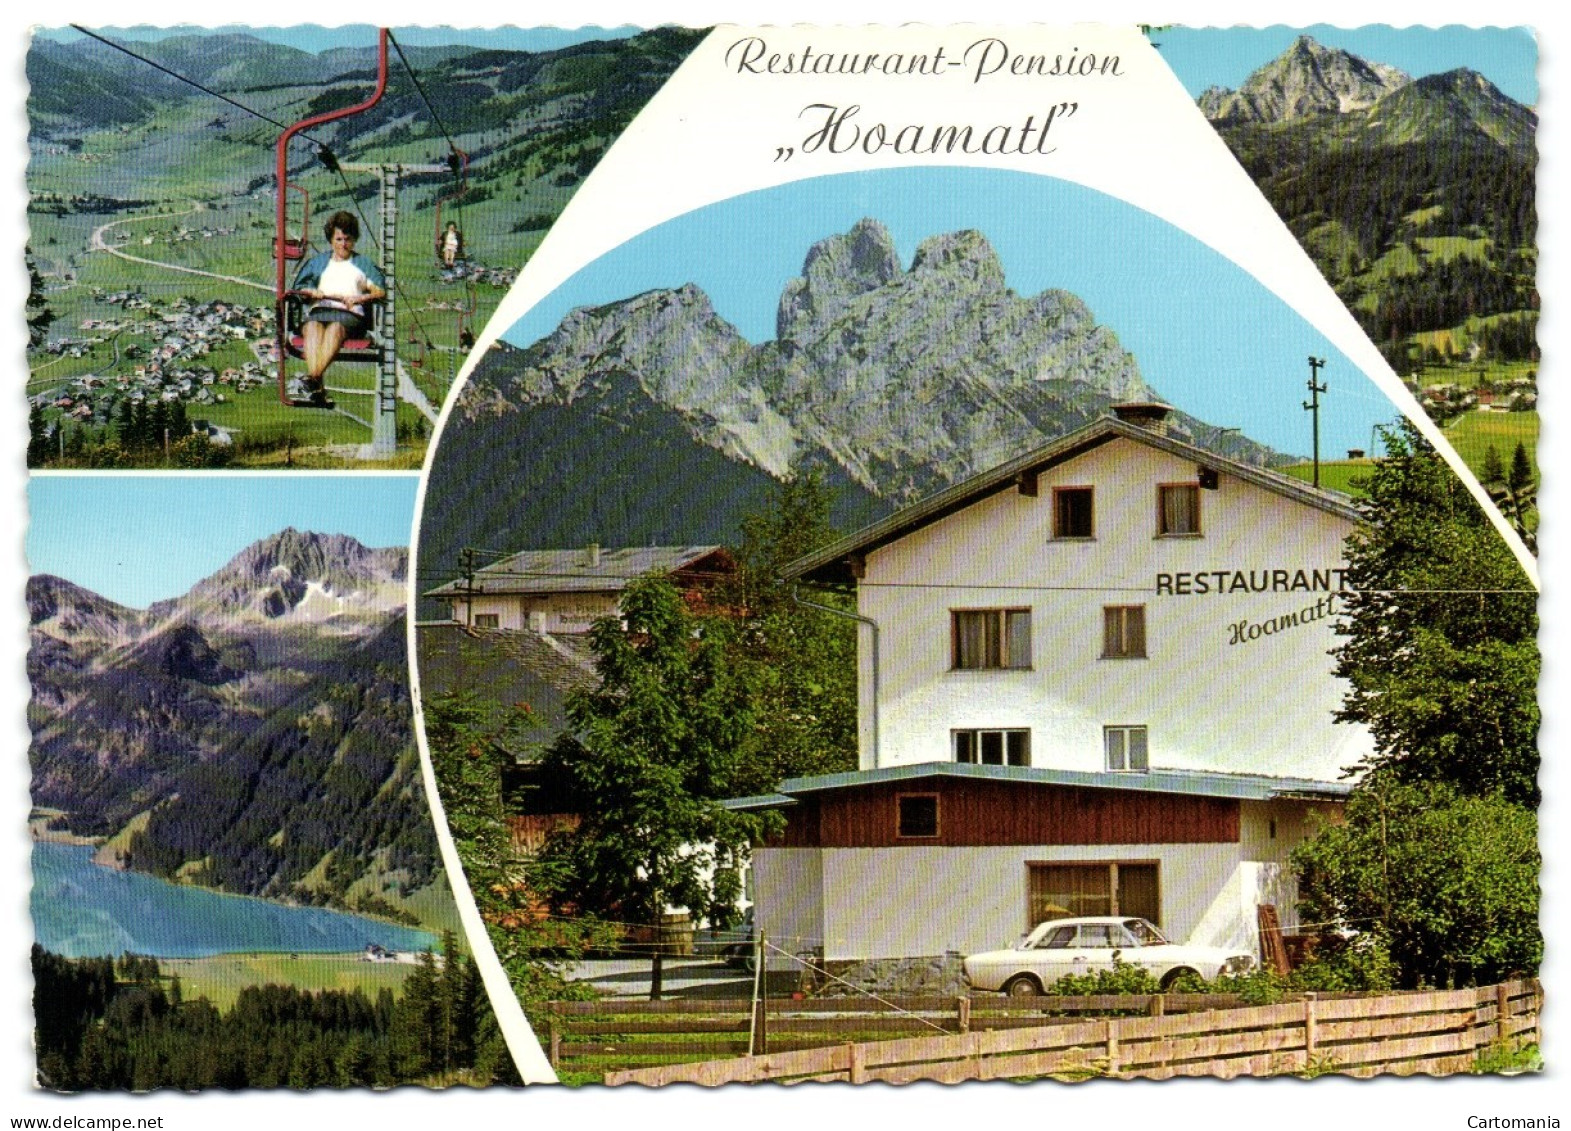 Tannheim In Tirol - Restaurant - Pension Hoamatl - Tannheim